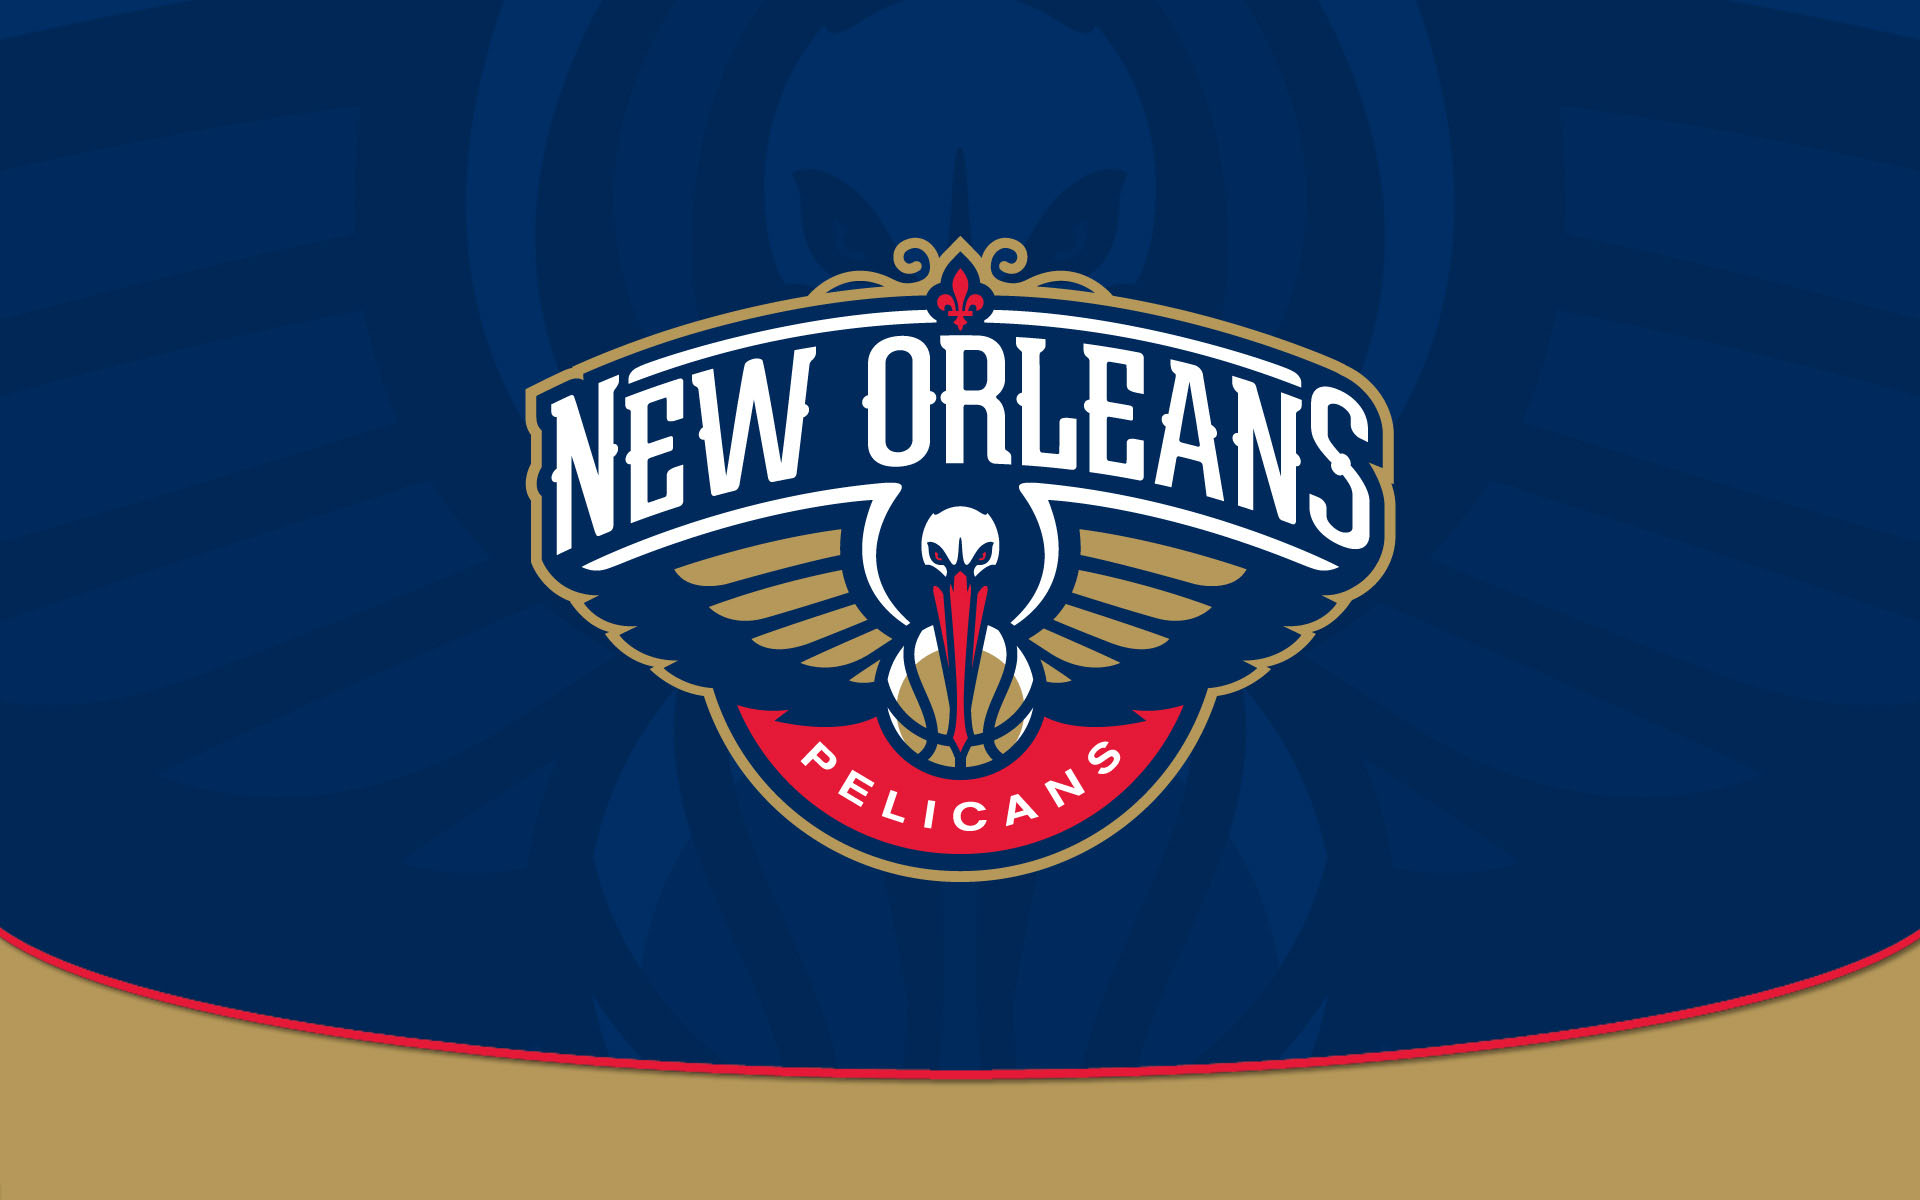 NBA New Orleans Pelicans Logo Design Background - 1920x1200 - Full ...